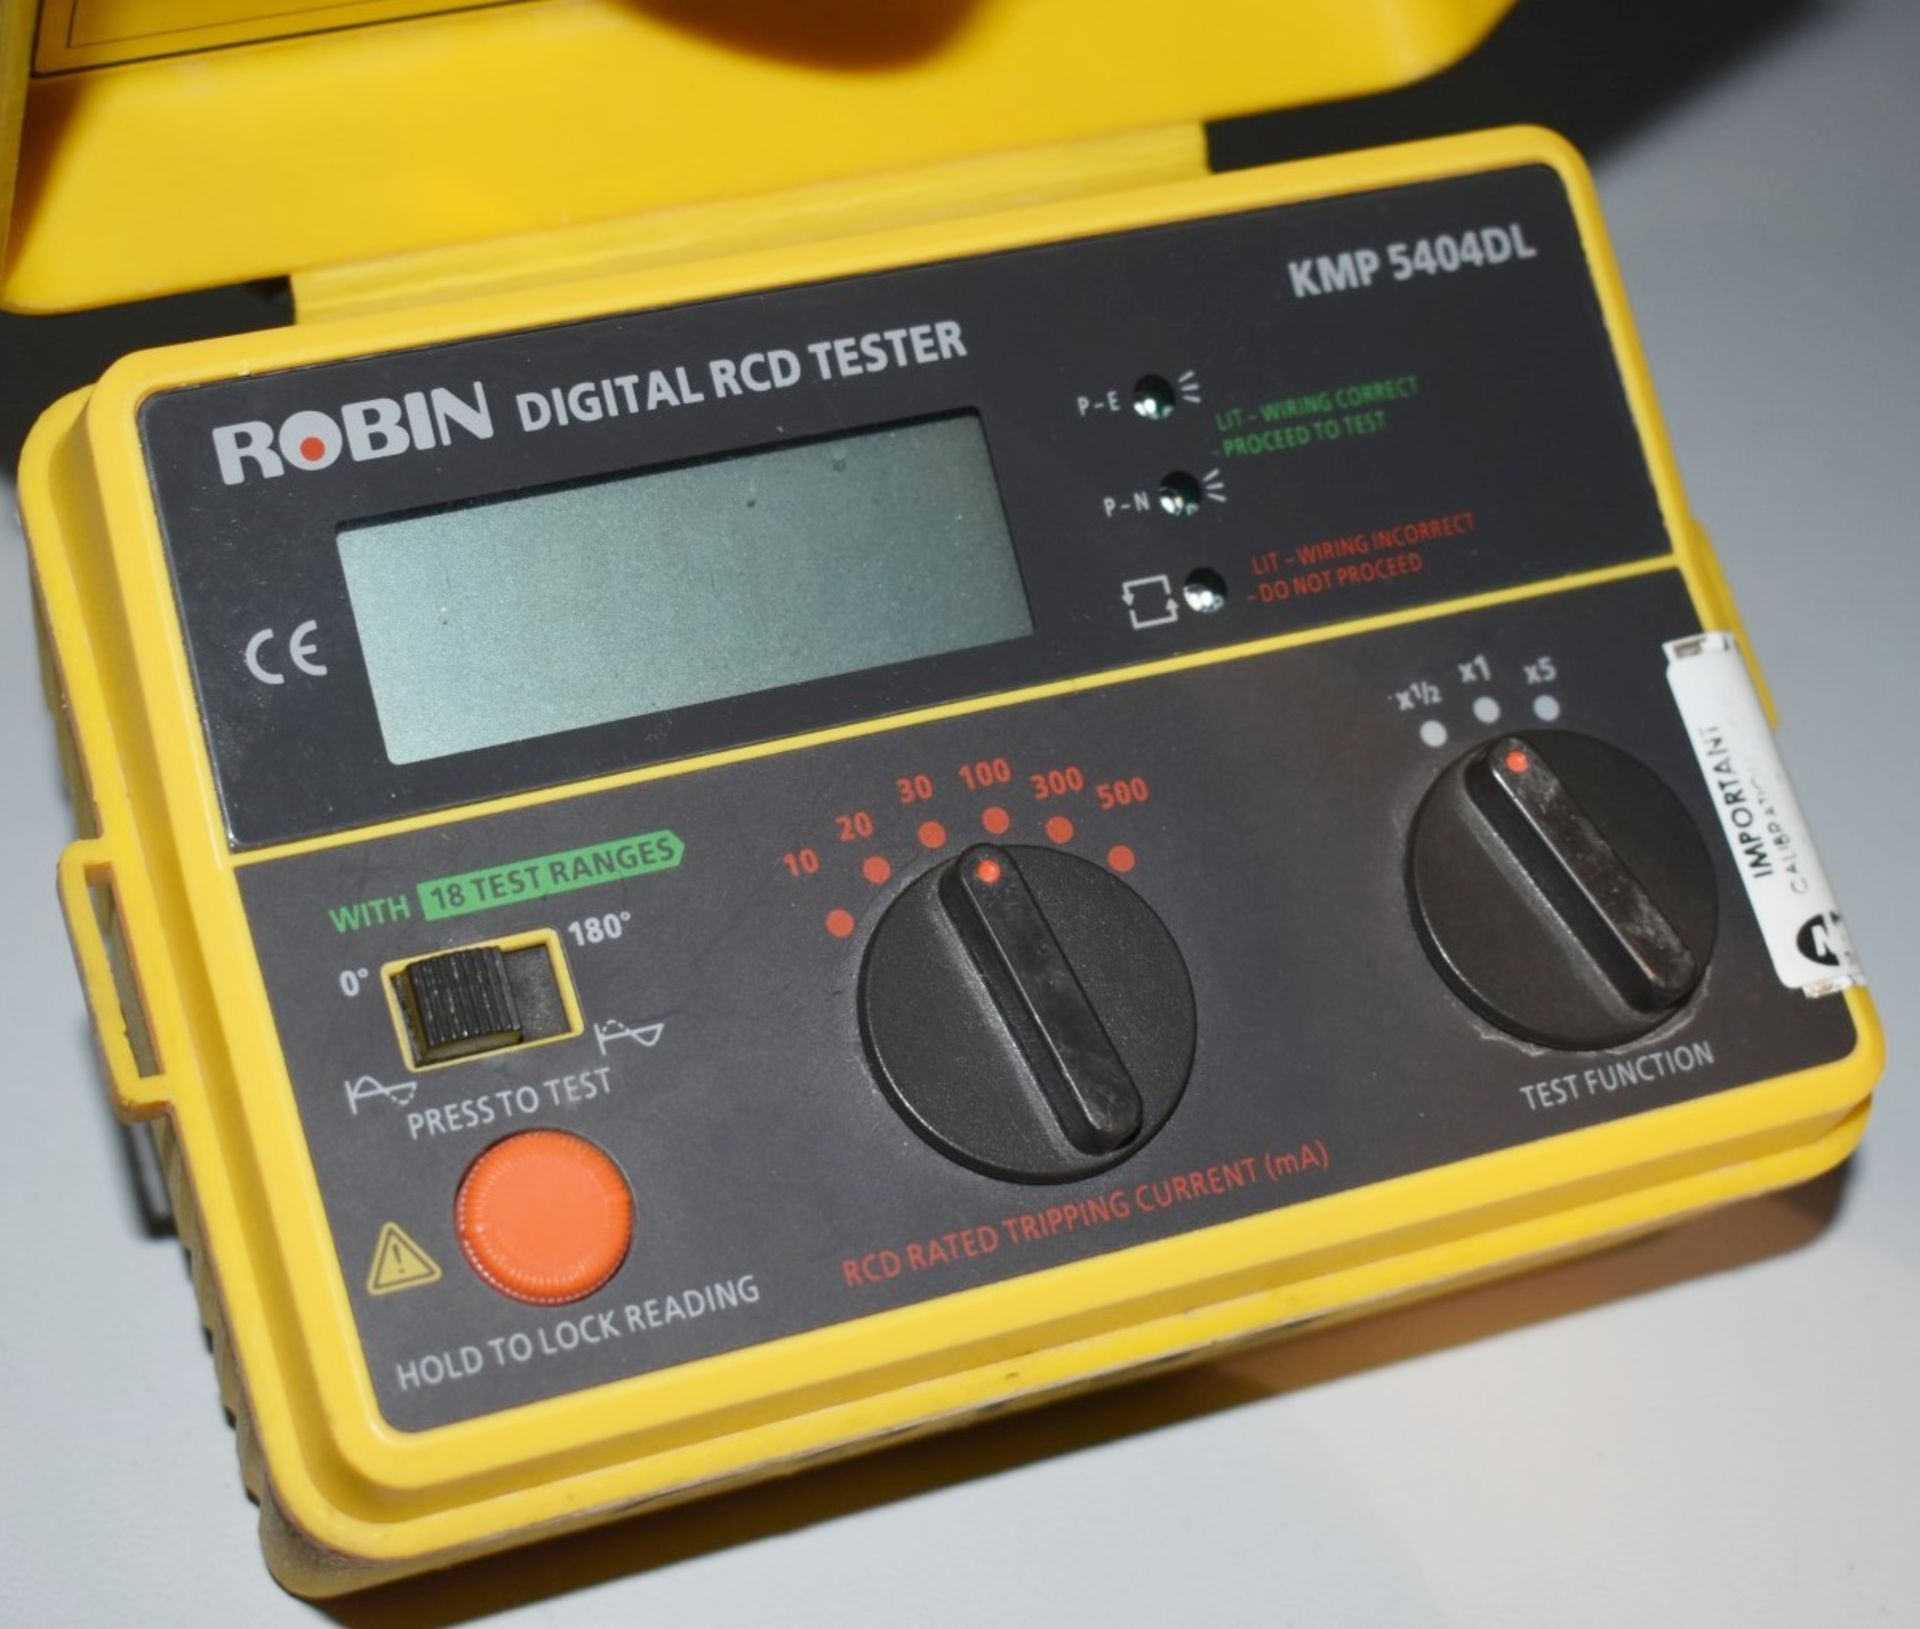 1 x Robin Digital RCD Tester Model KMP 5404DL   PME308